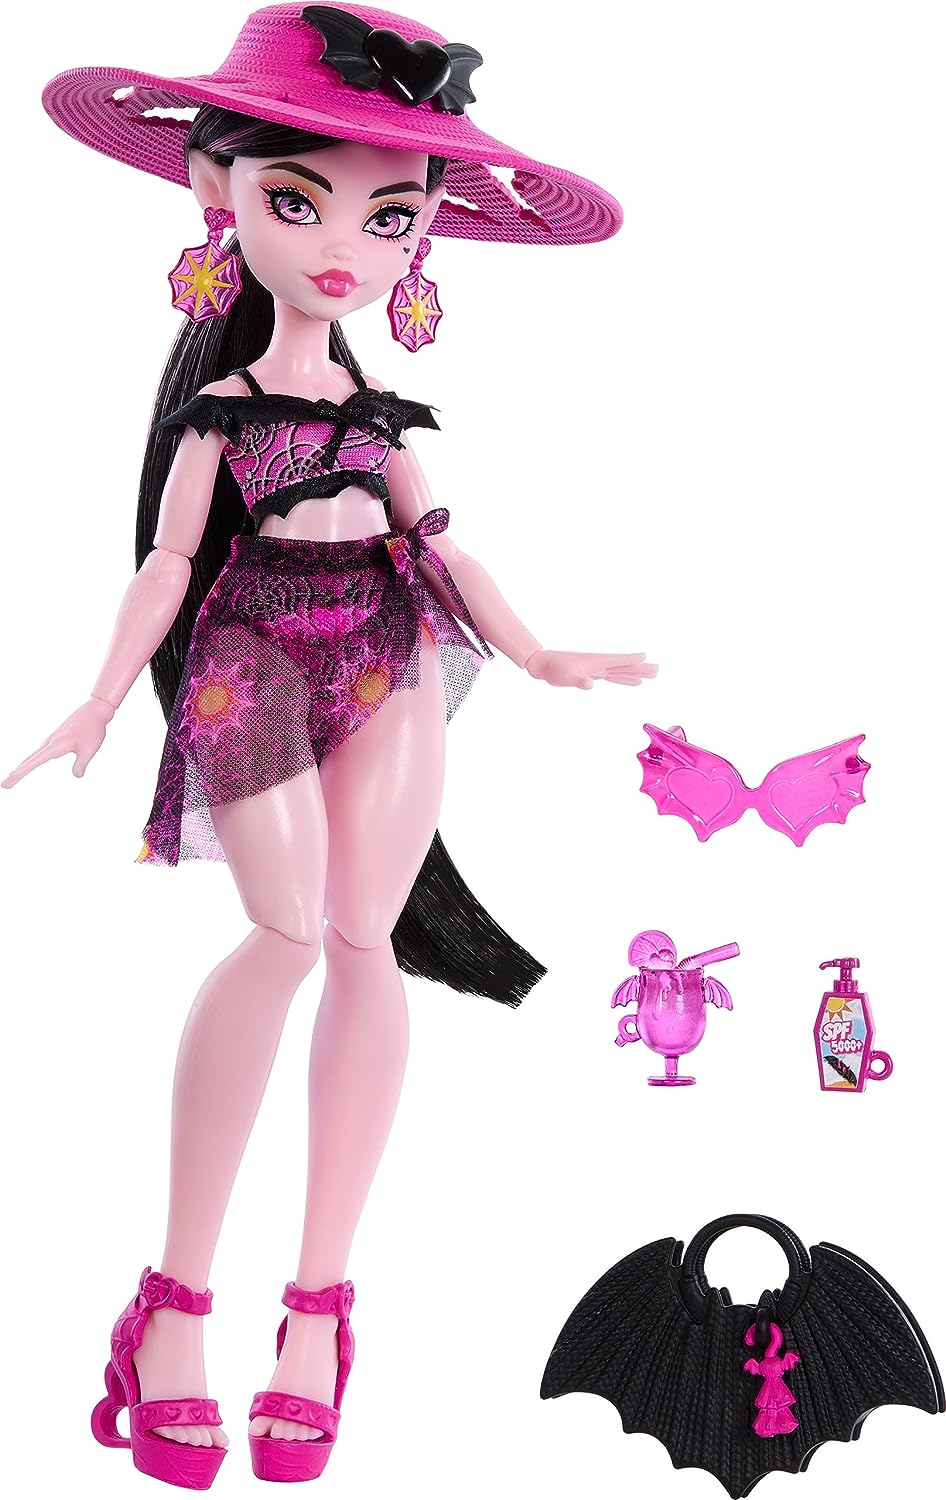 Doll Review: G3 Monster High Clawdeen Wolf & Frankie Stein